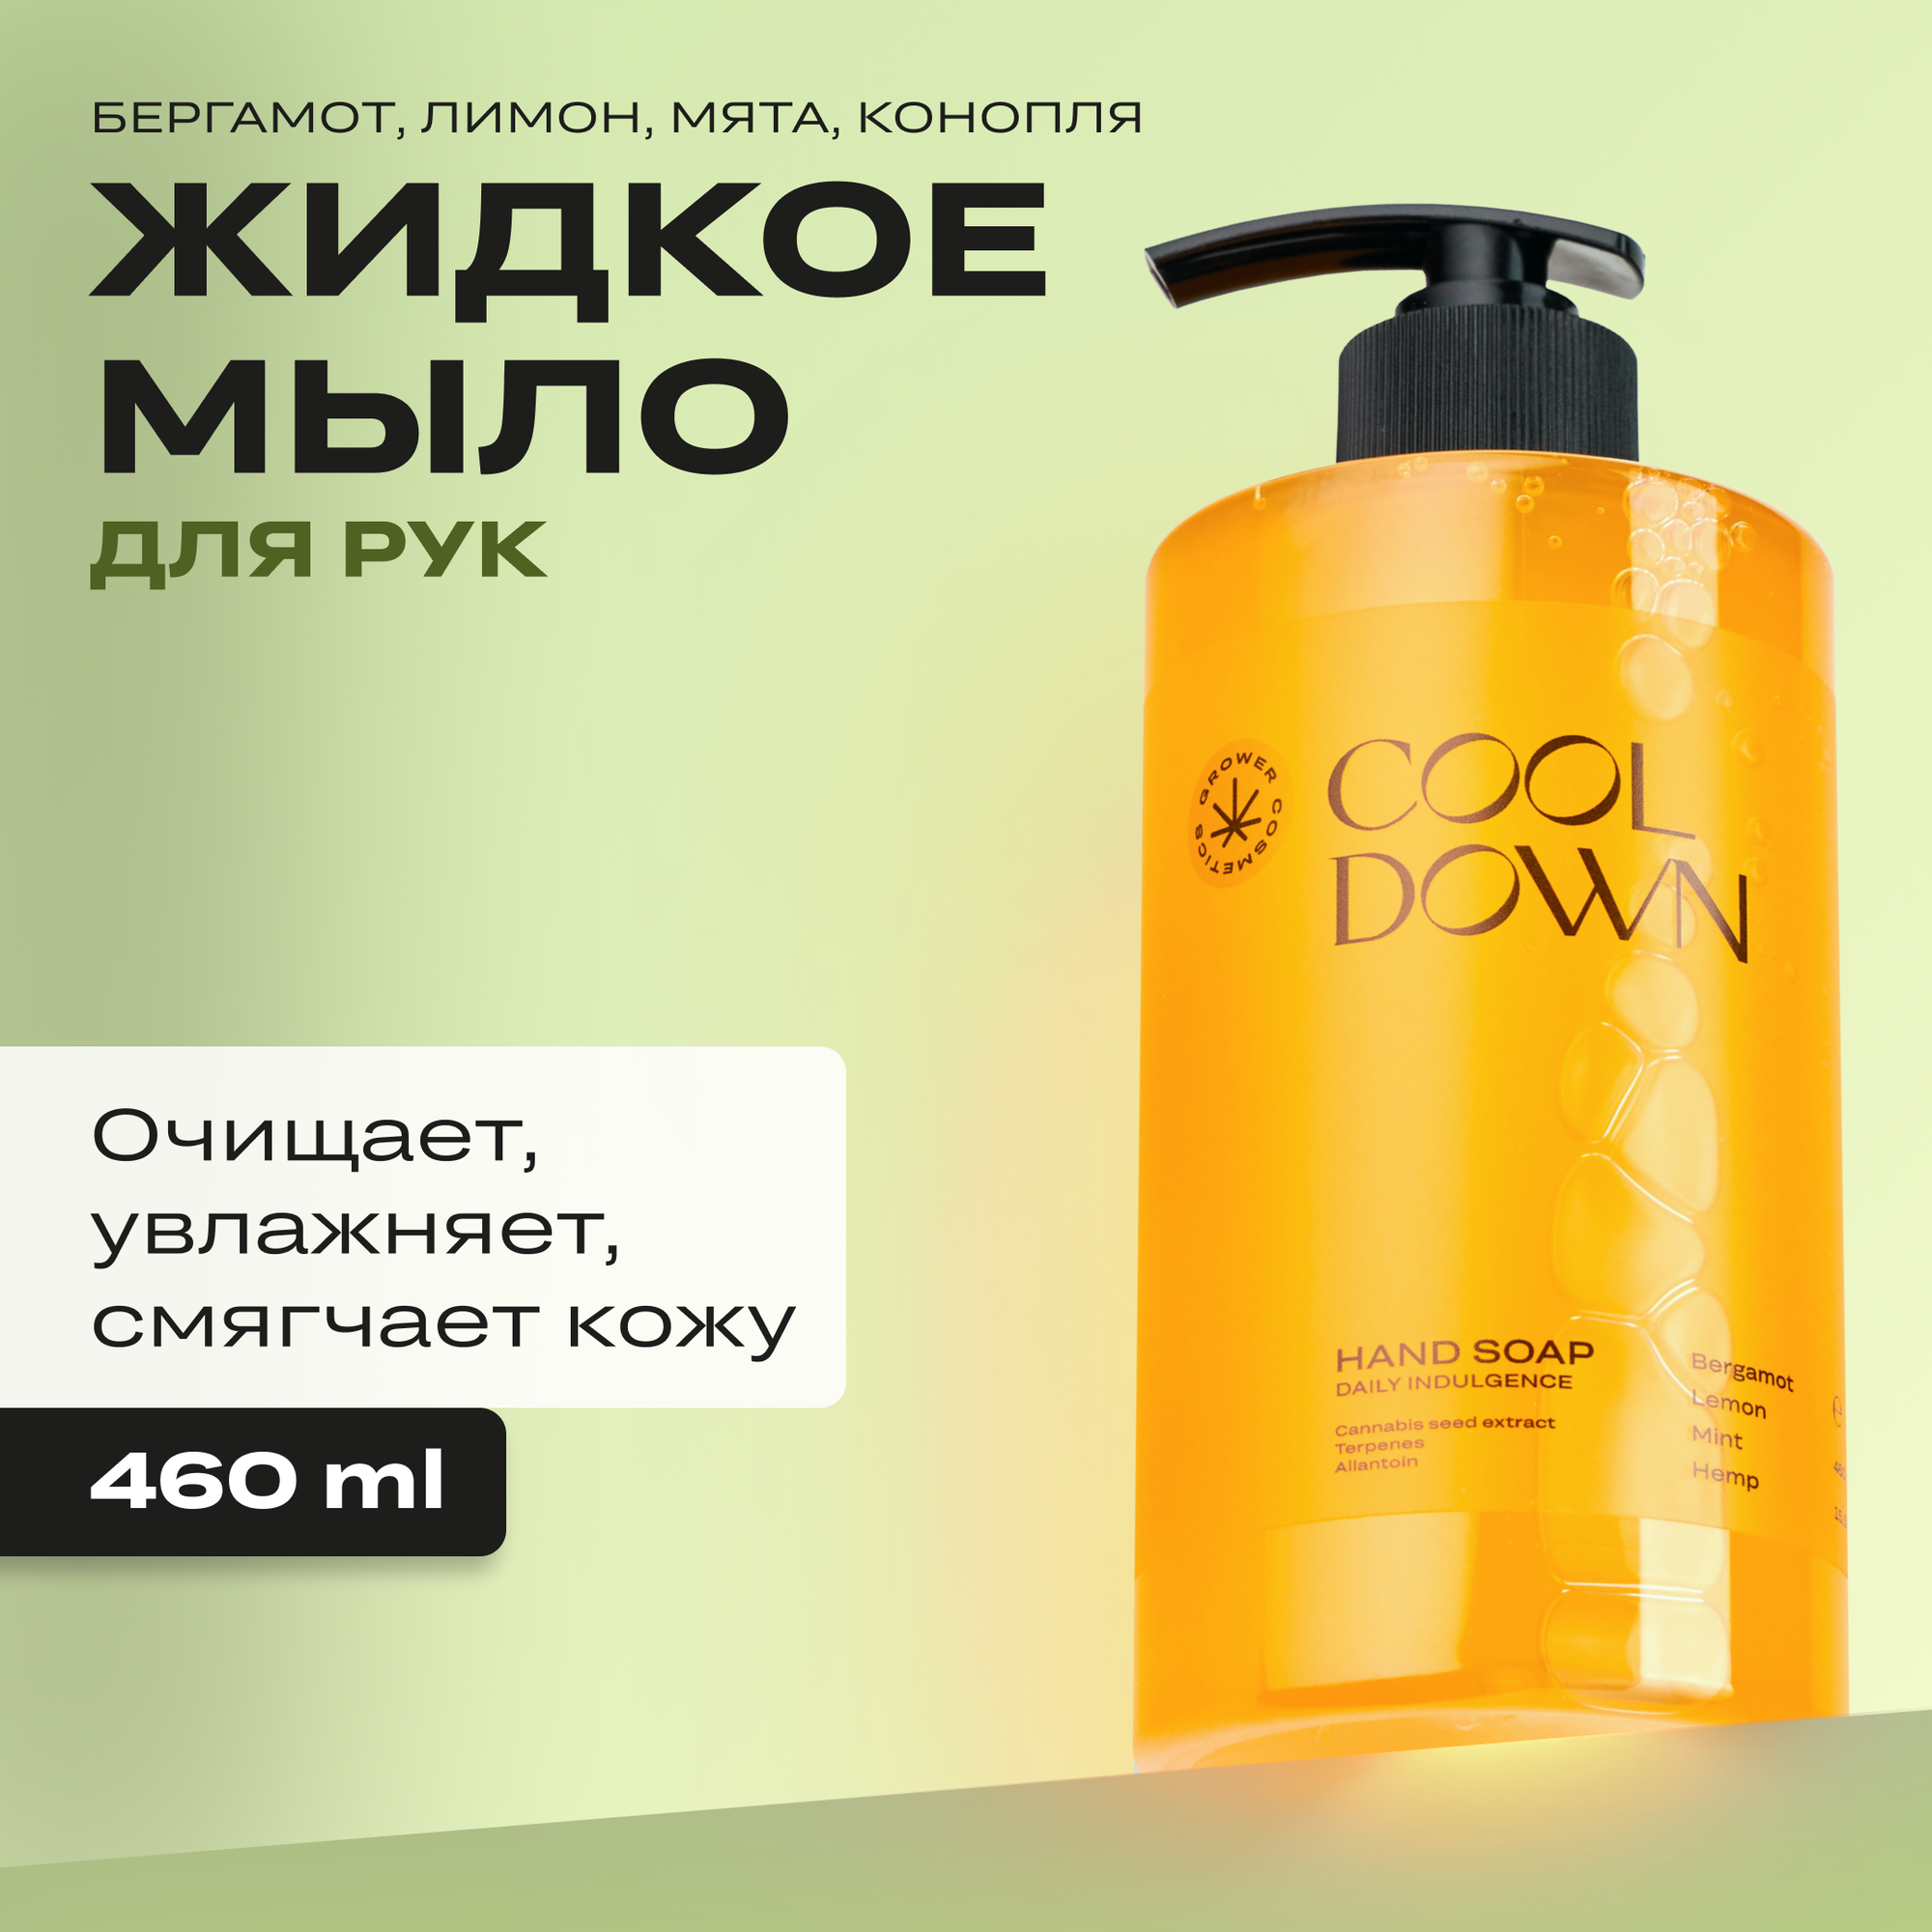 Жидкое мыло Grower cosmetics "COOL DOWN" Бергамот, Лимон, Мята, Конопля. 460мл